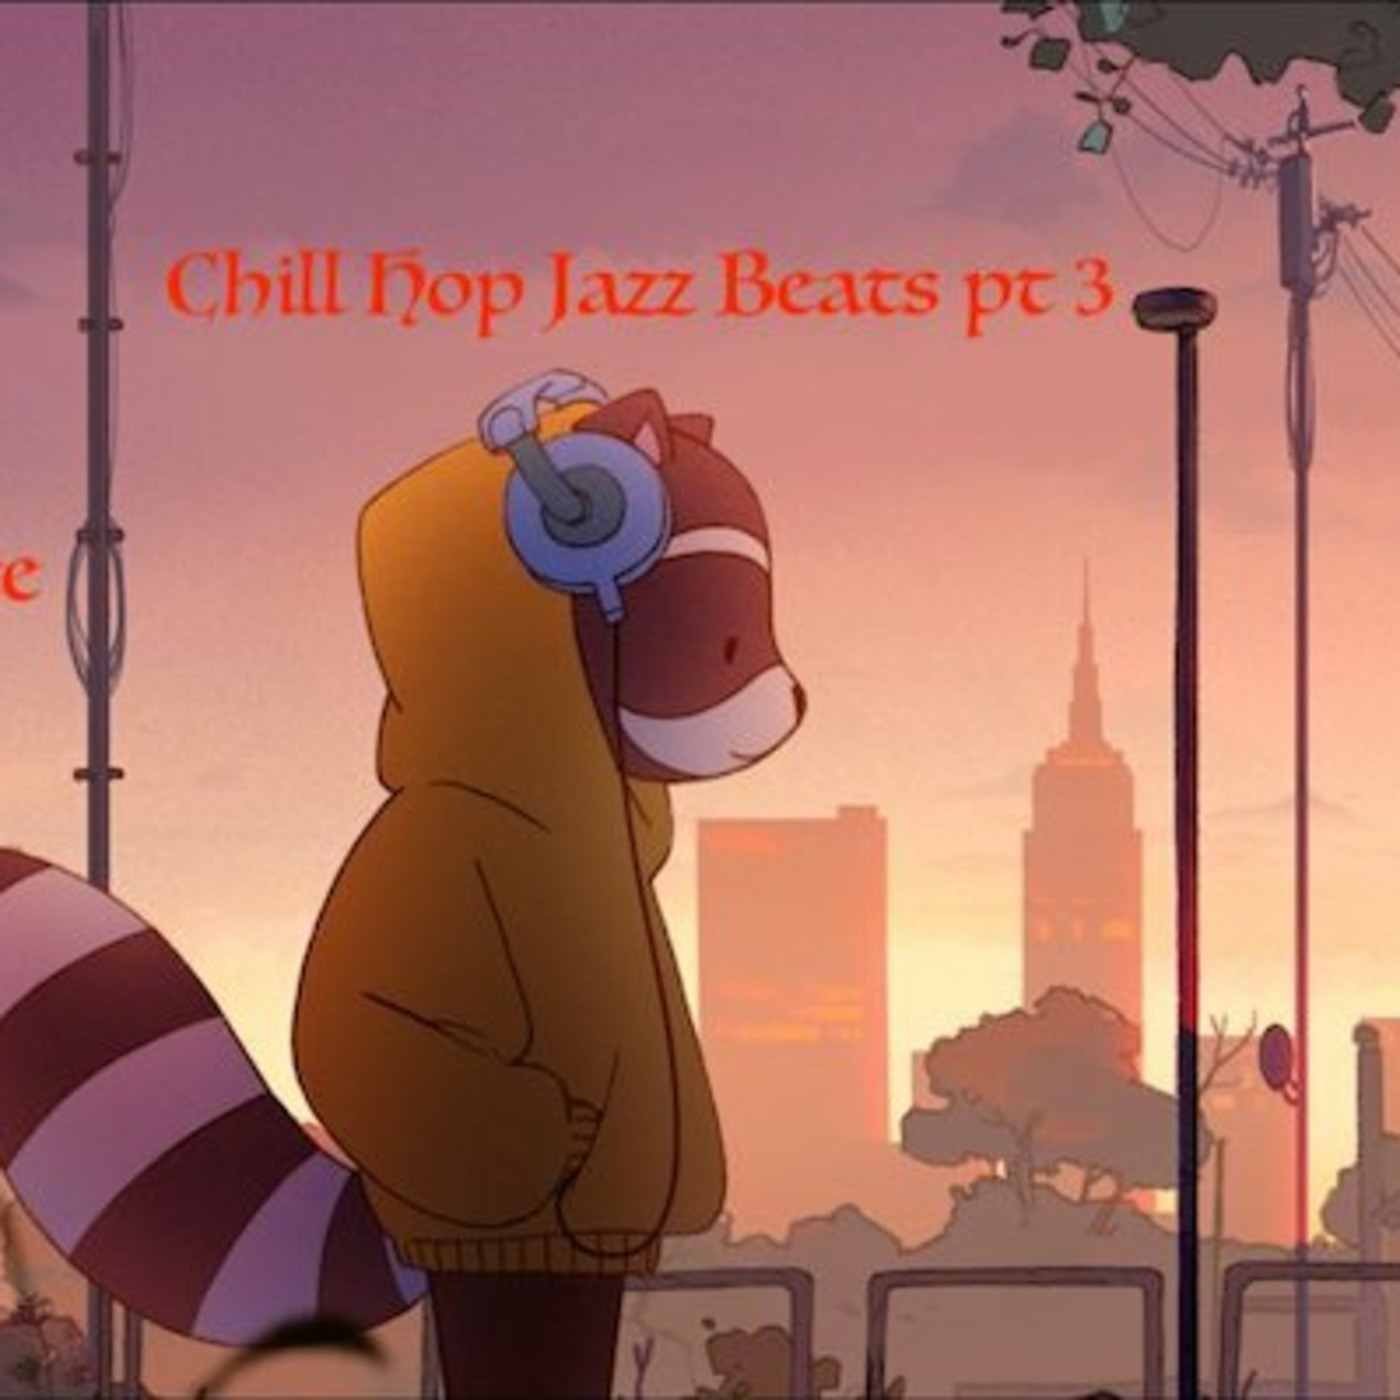 Chill Hop Jazz Beats pt3